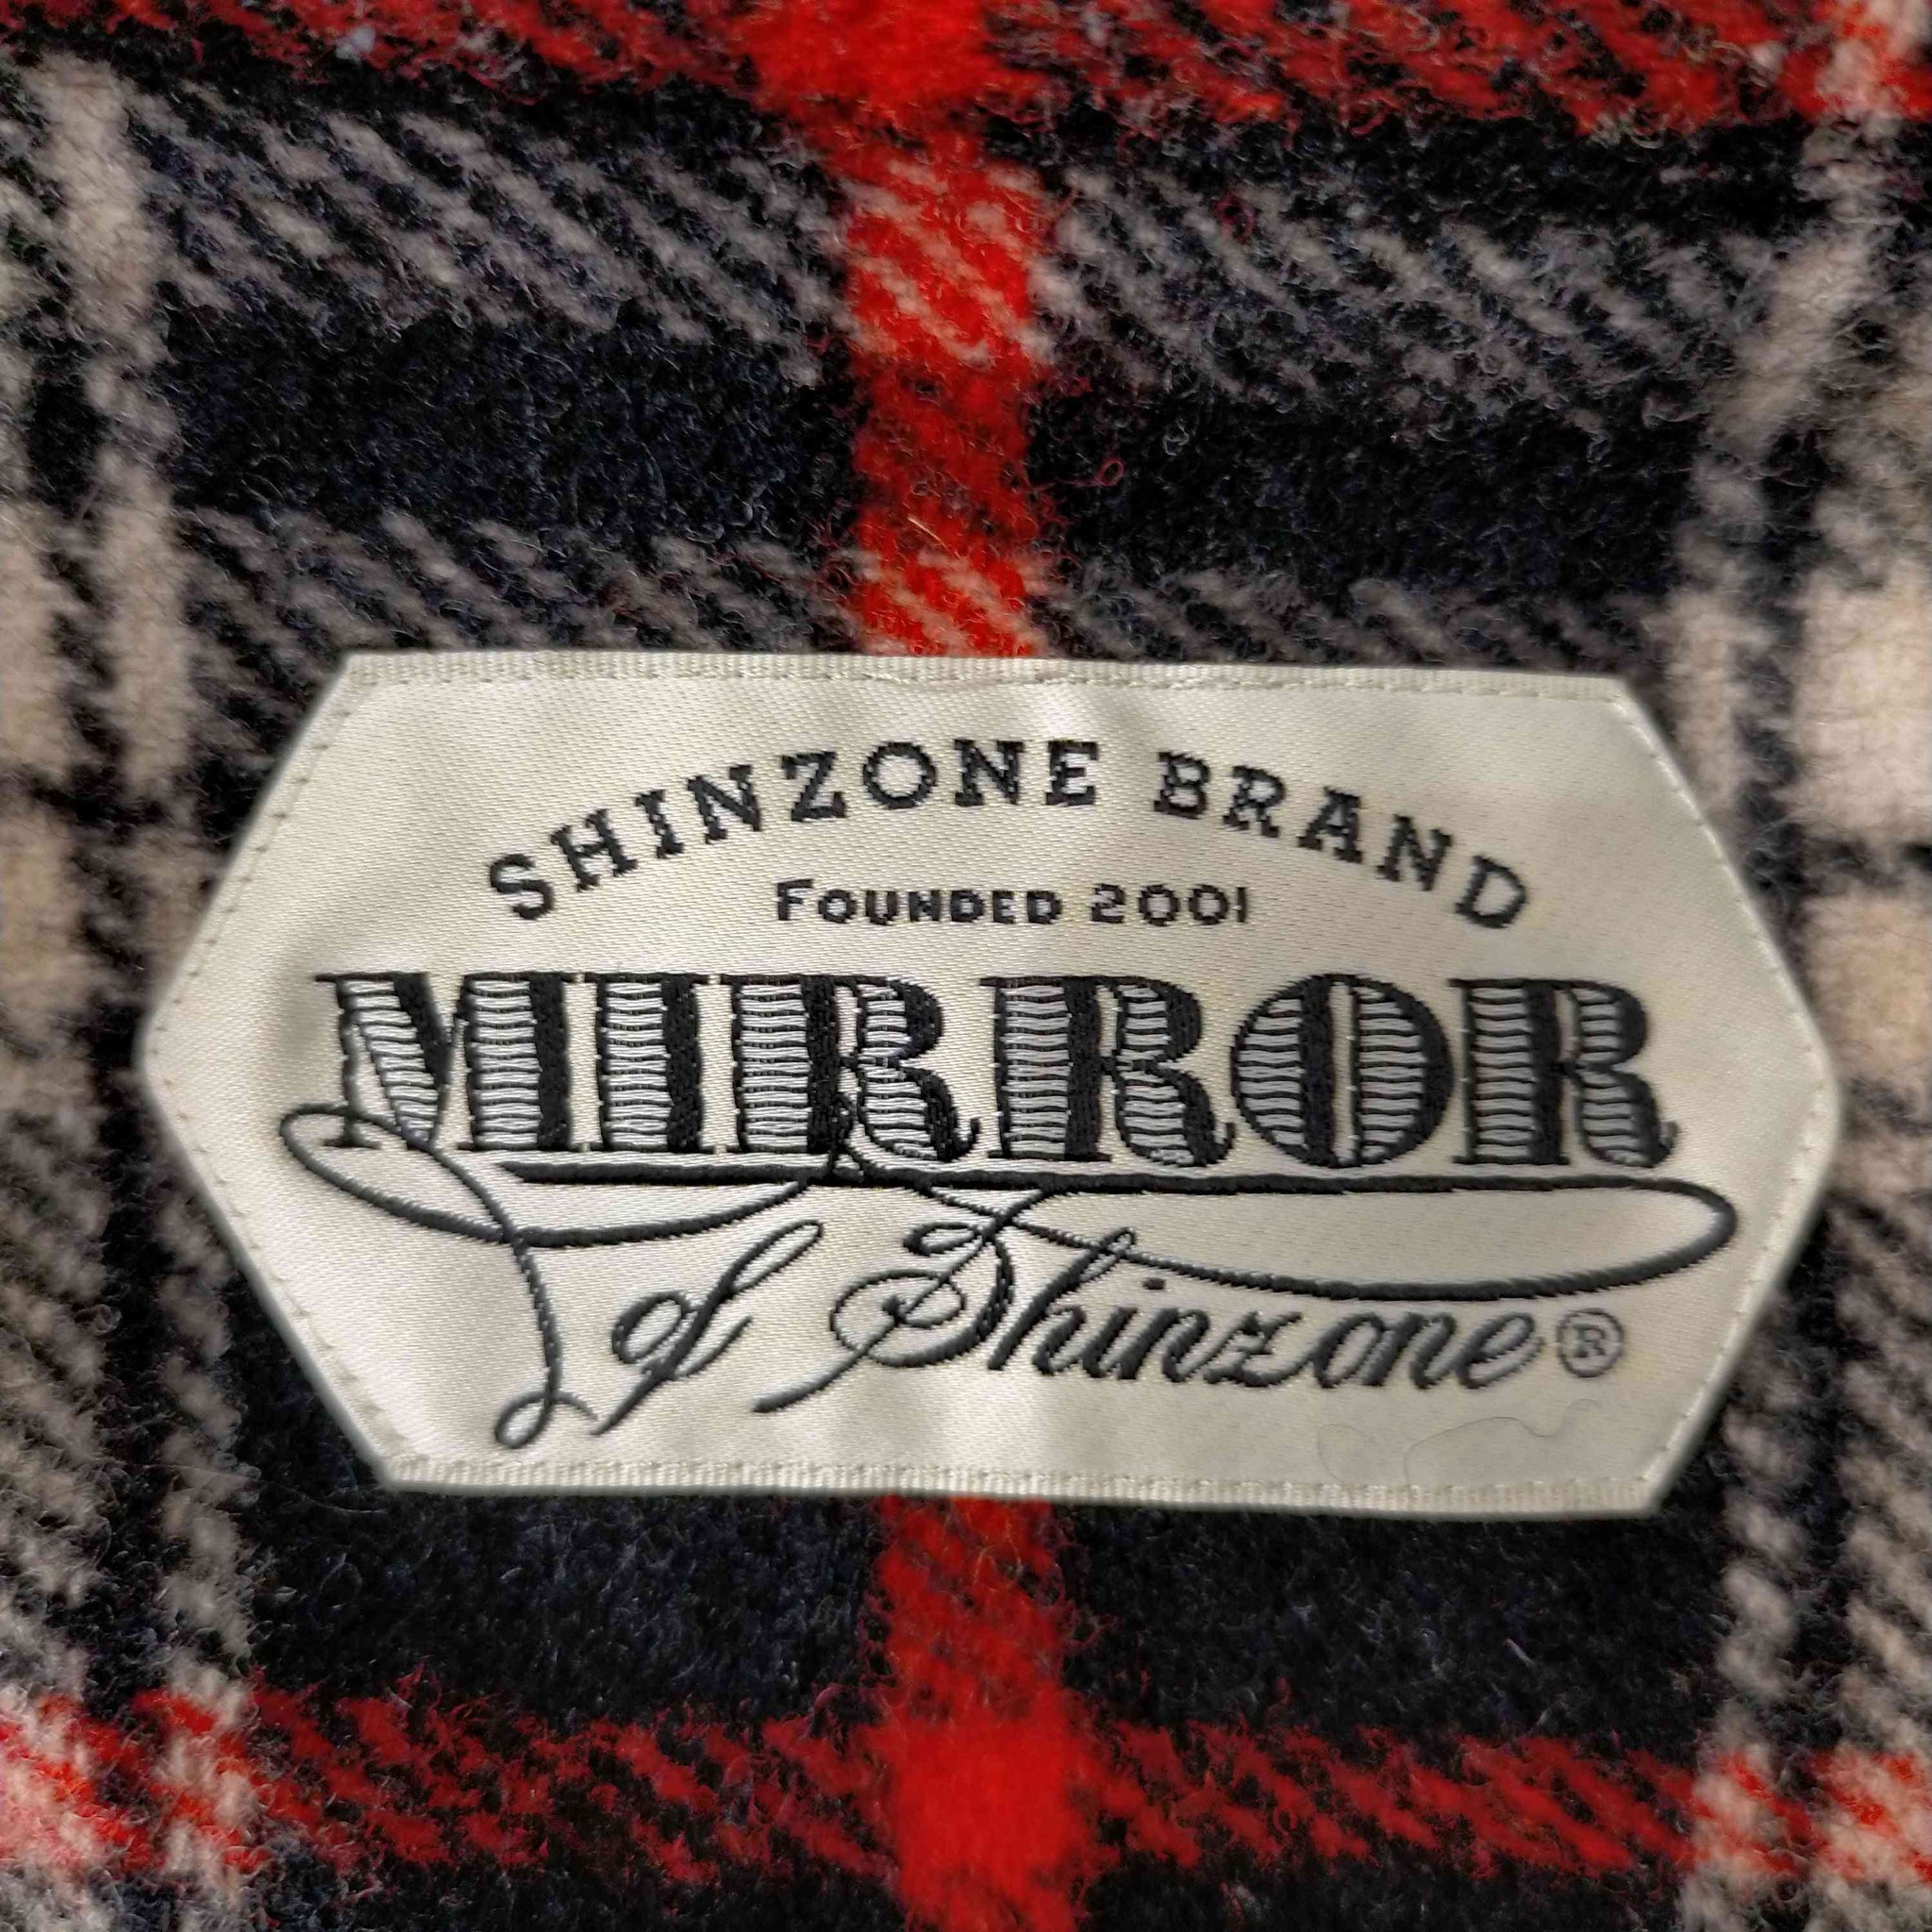 MIRROR OF Shinzone(ミラーオブシンゾーン)CPO JKウールシャツ